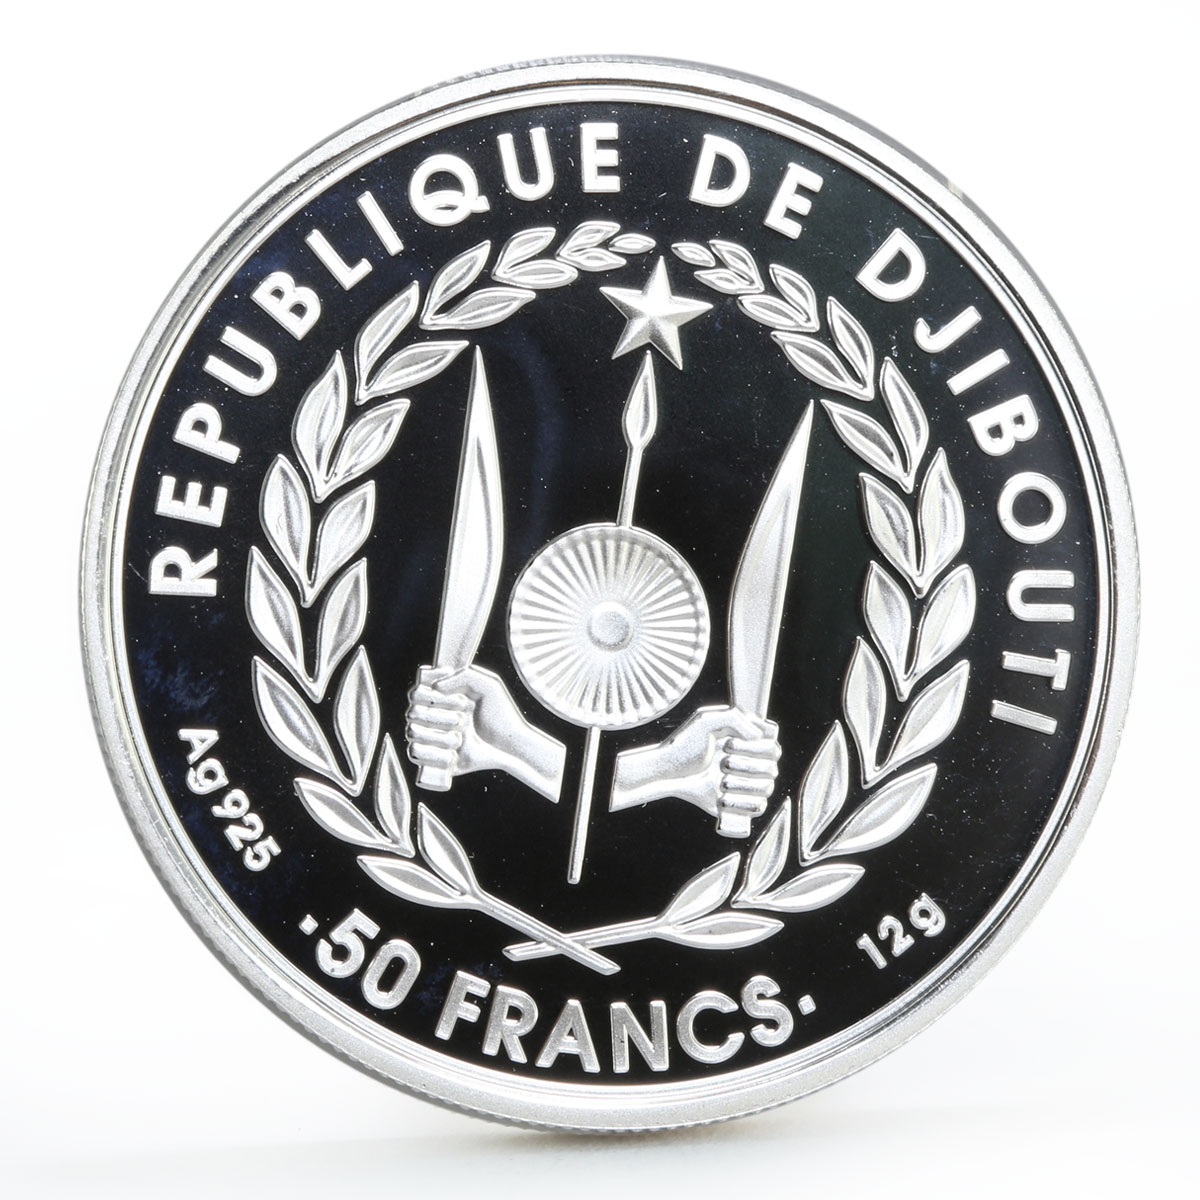 Djibouti 50 francs Tour de France Cycling White Jersey colored silver coin 2018